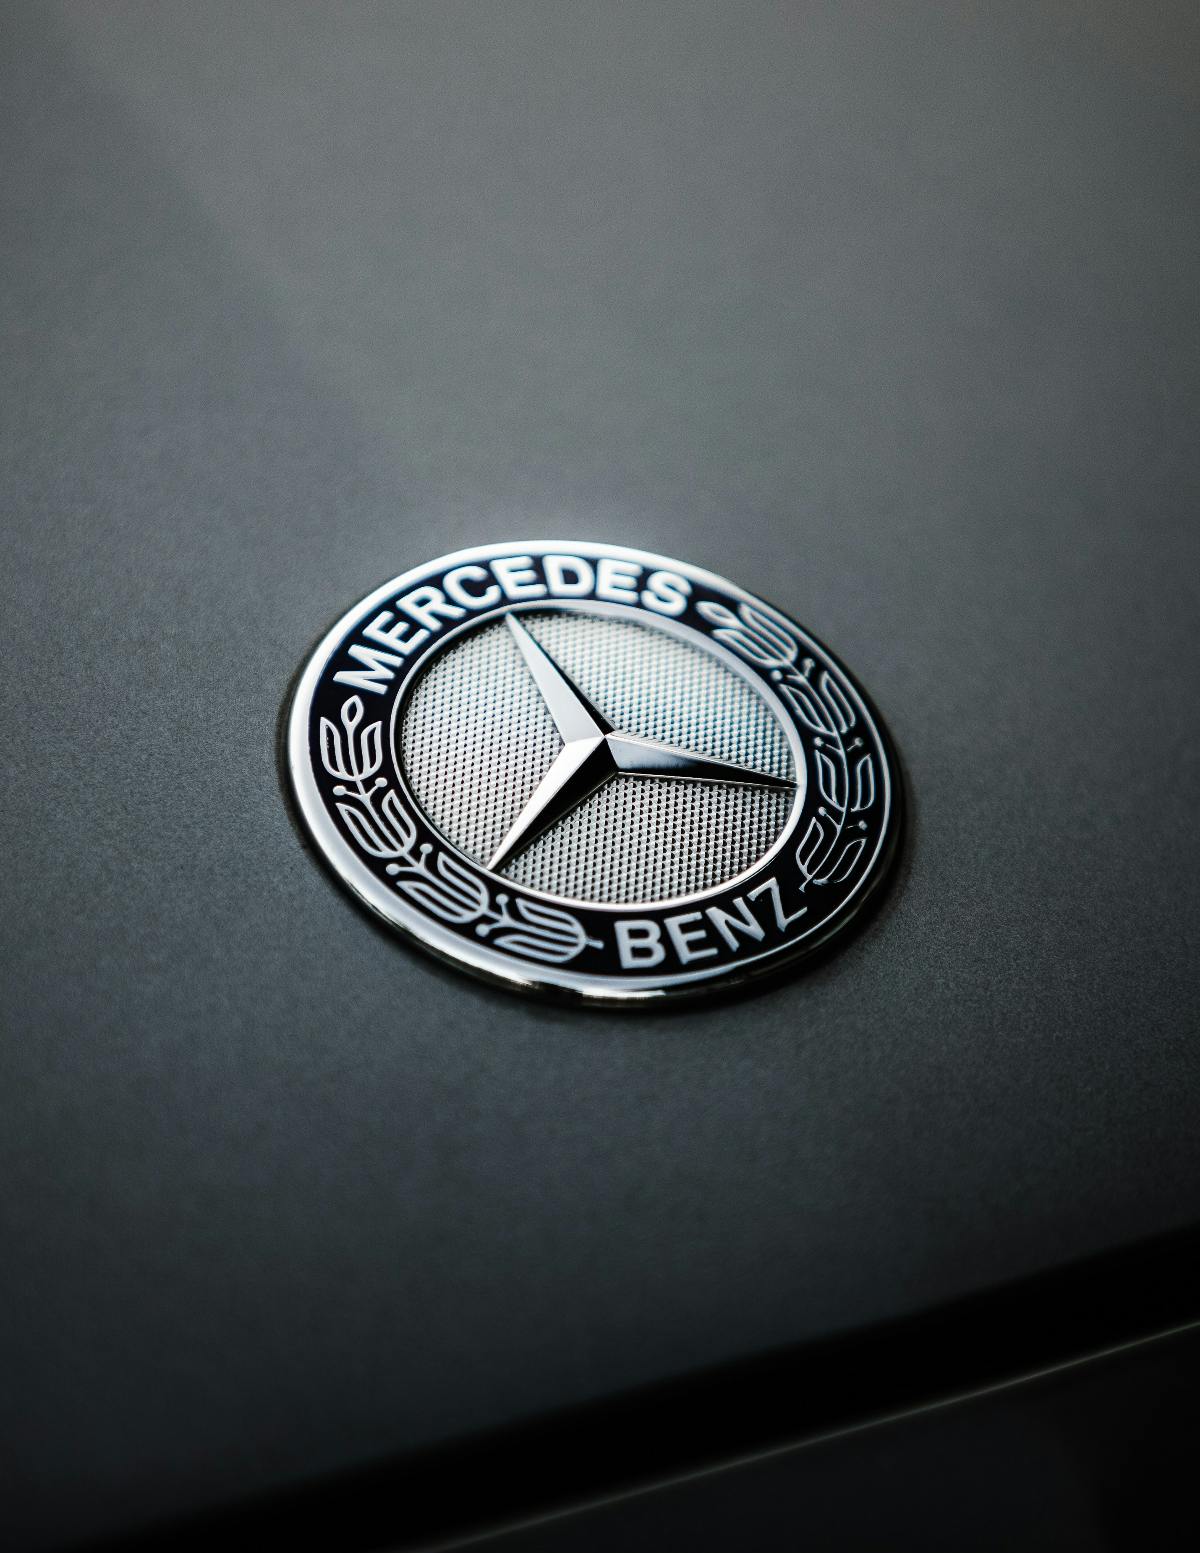 A glamor shot of the Mercedes Ebnz logo